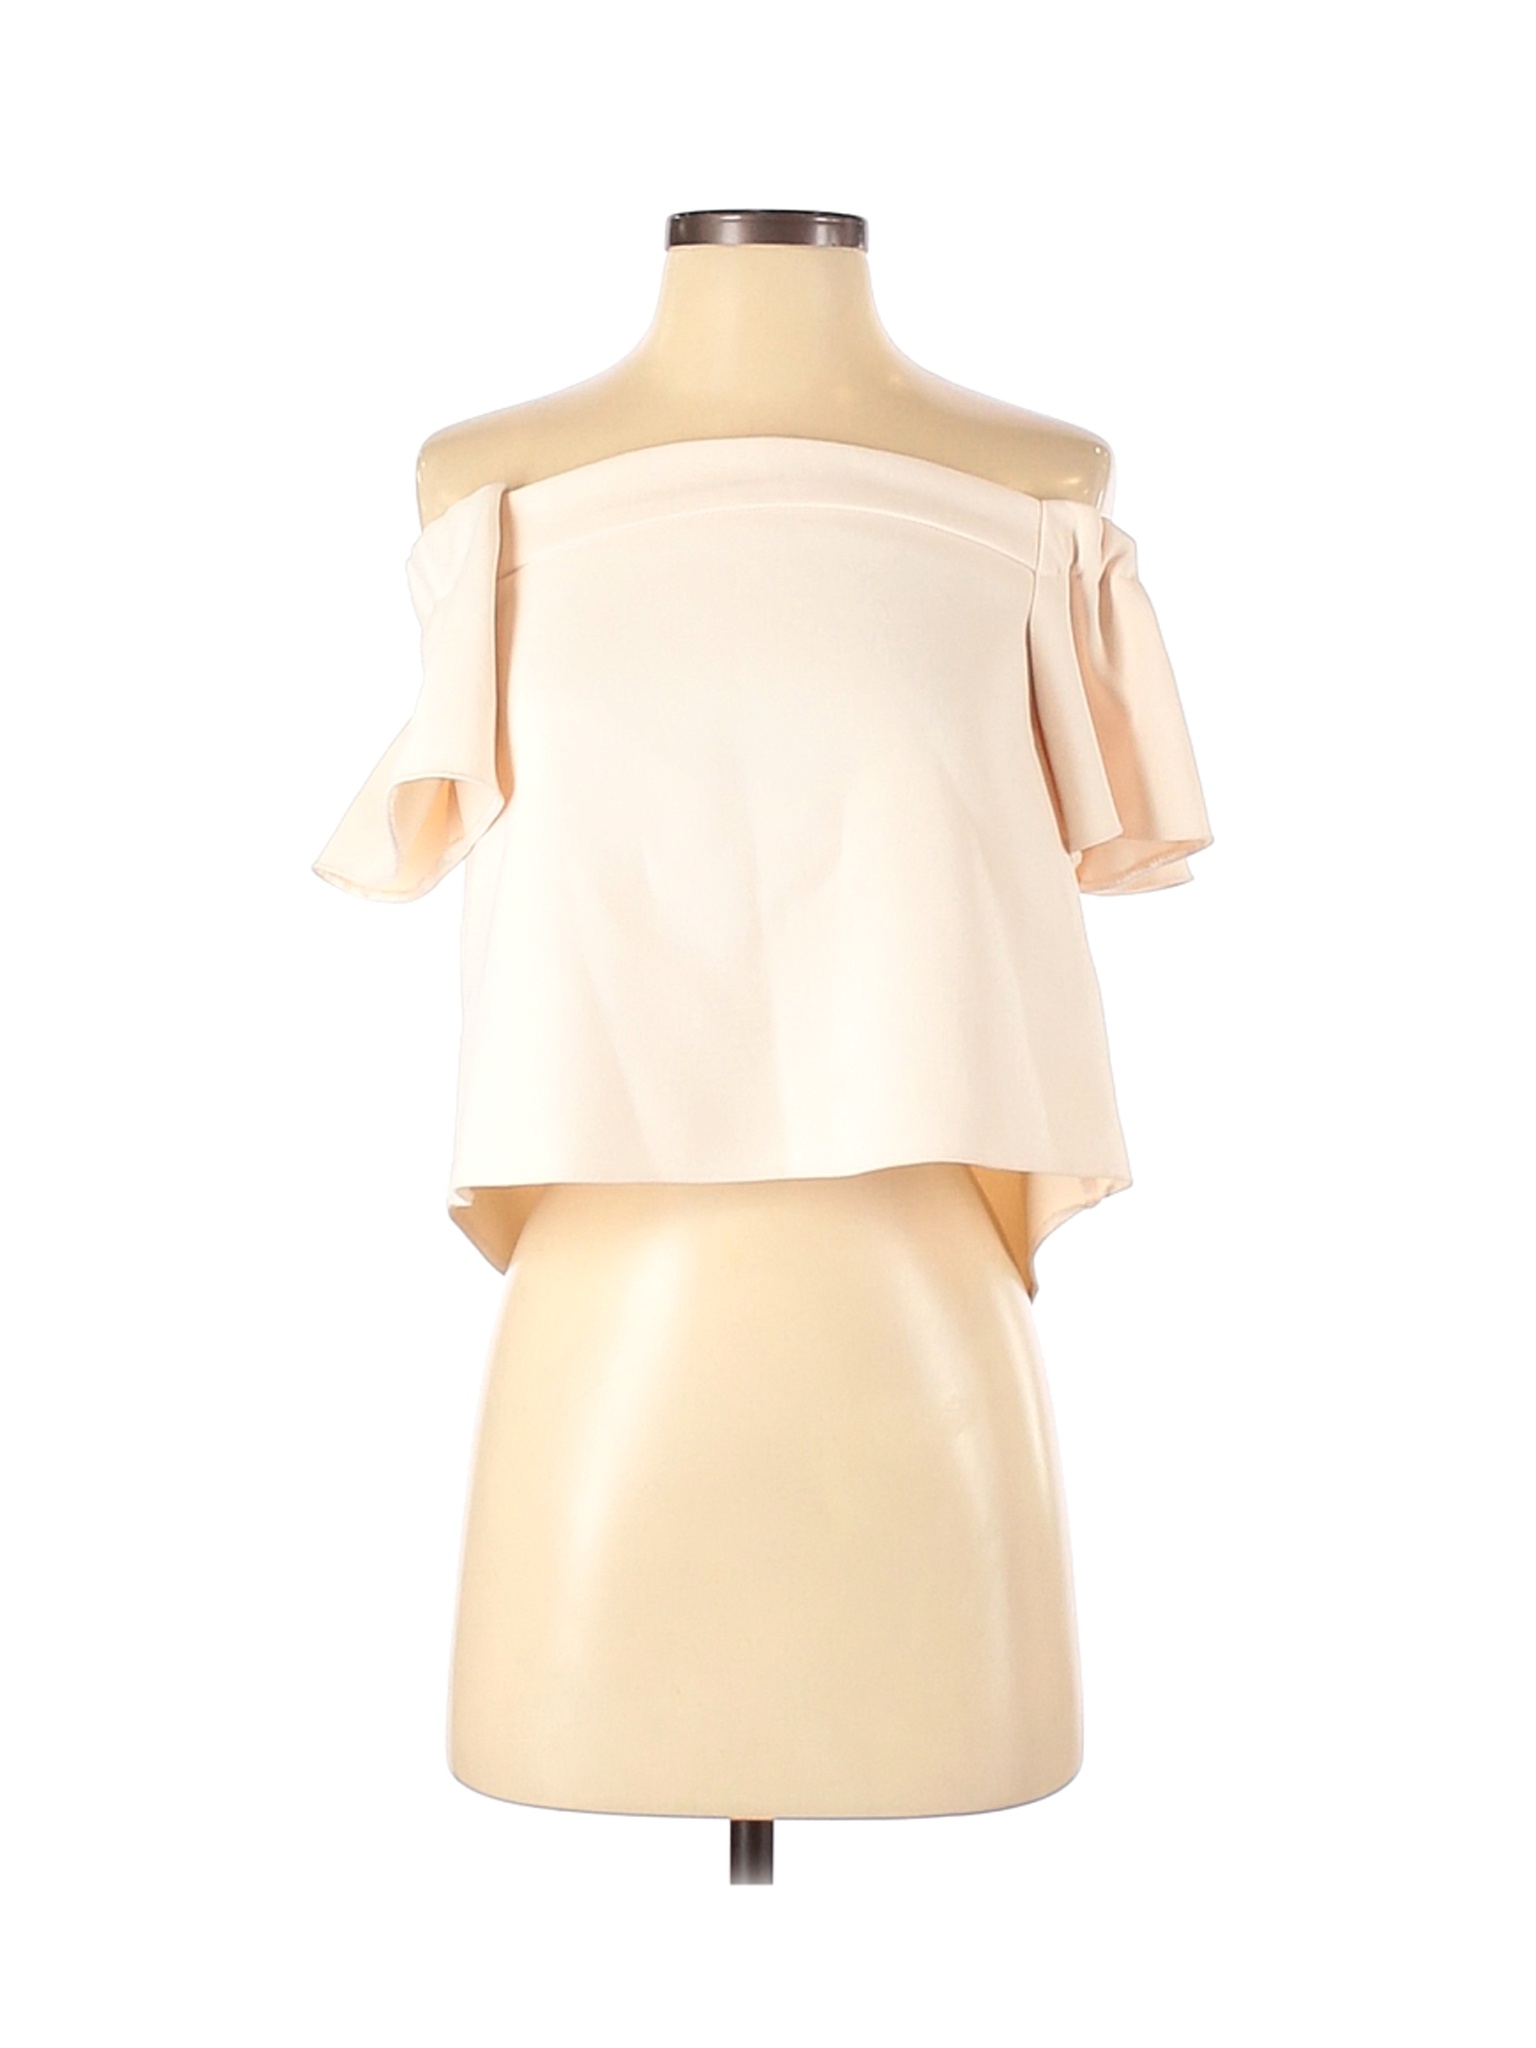 Topshop Women Brown Short Sleeve Blouse 2 | eBay